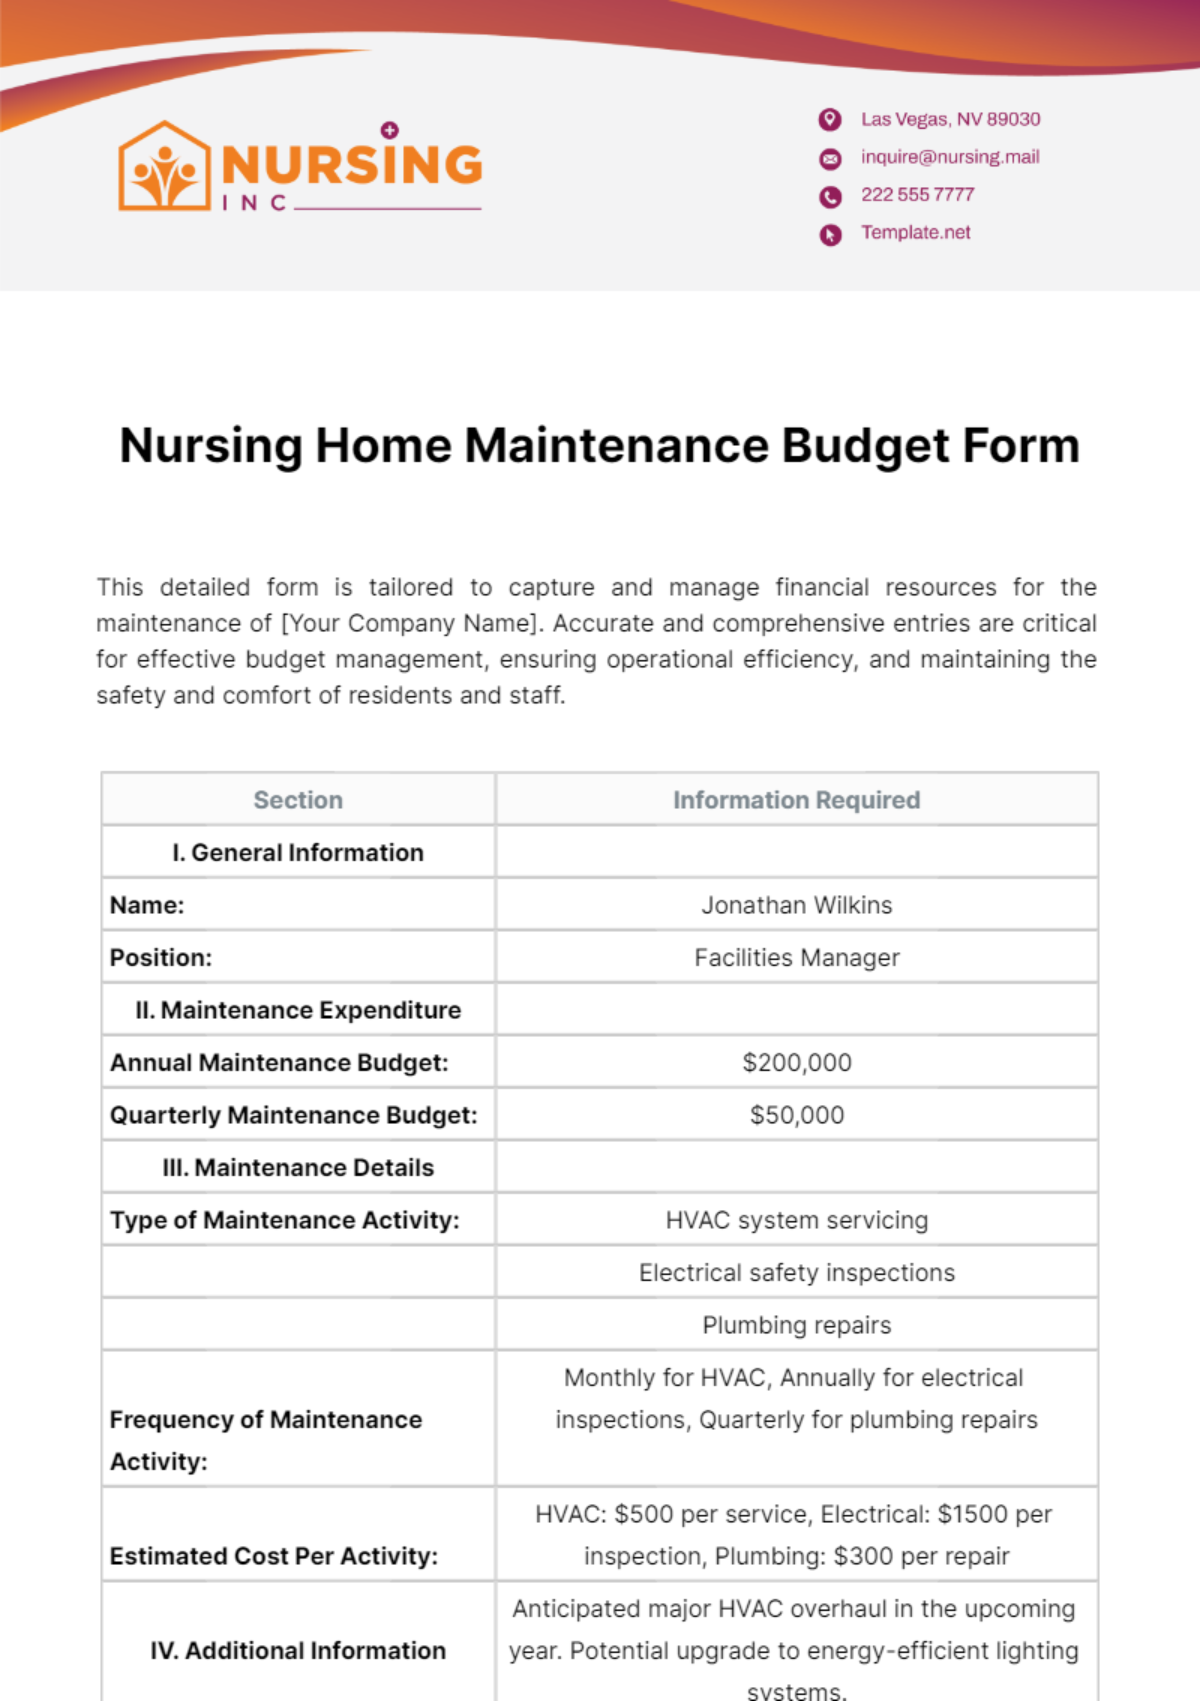 Free Nursing Home Maintenance Budget Form Template